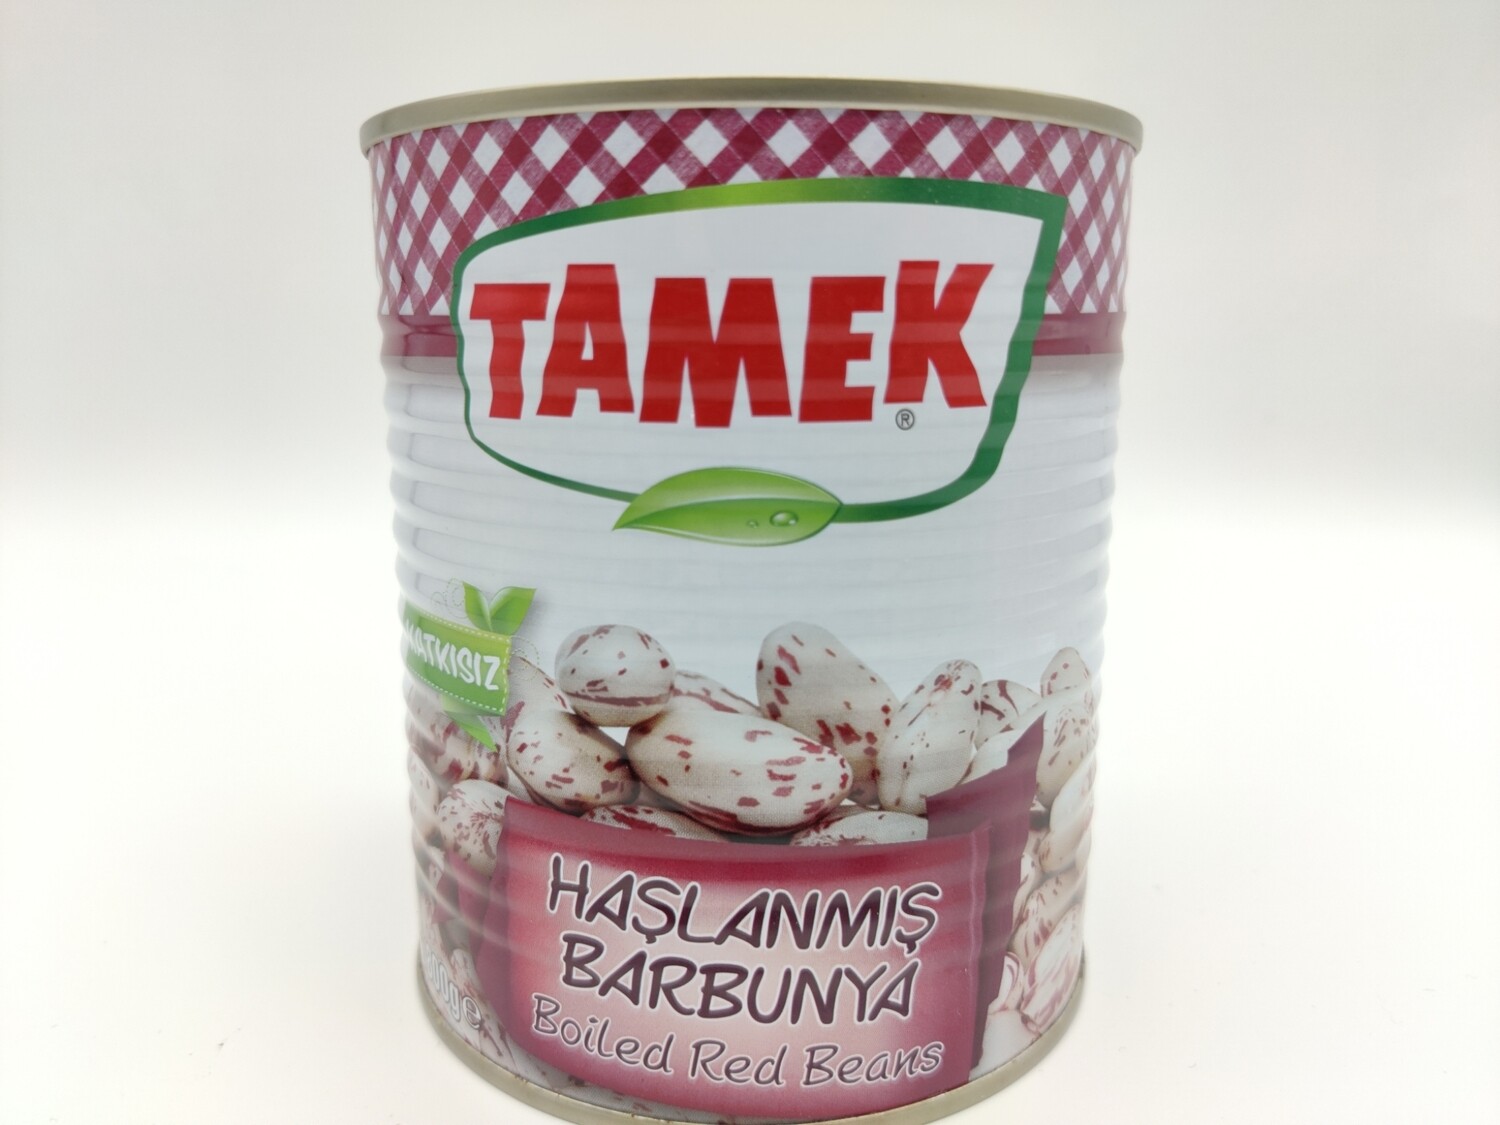 TAMEK Boiled Red Beans (Haslanmis Barbunya) 800g Can